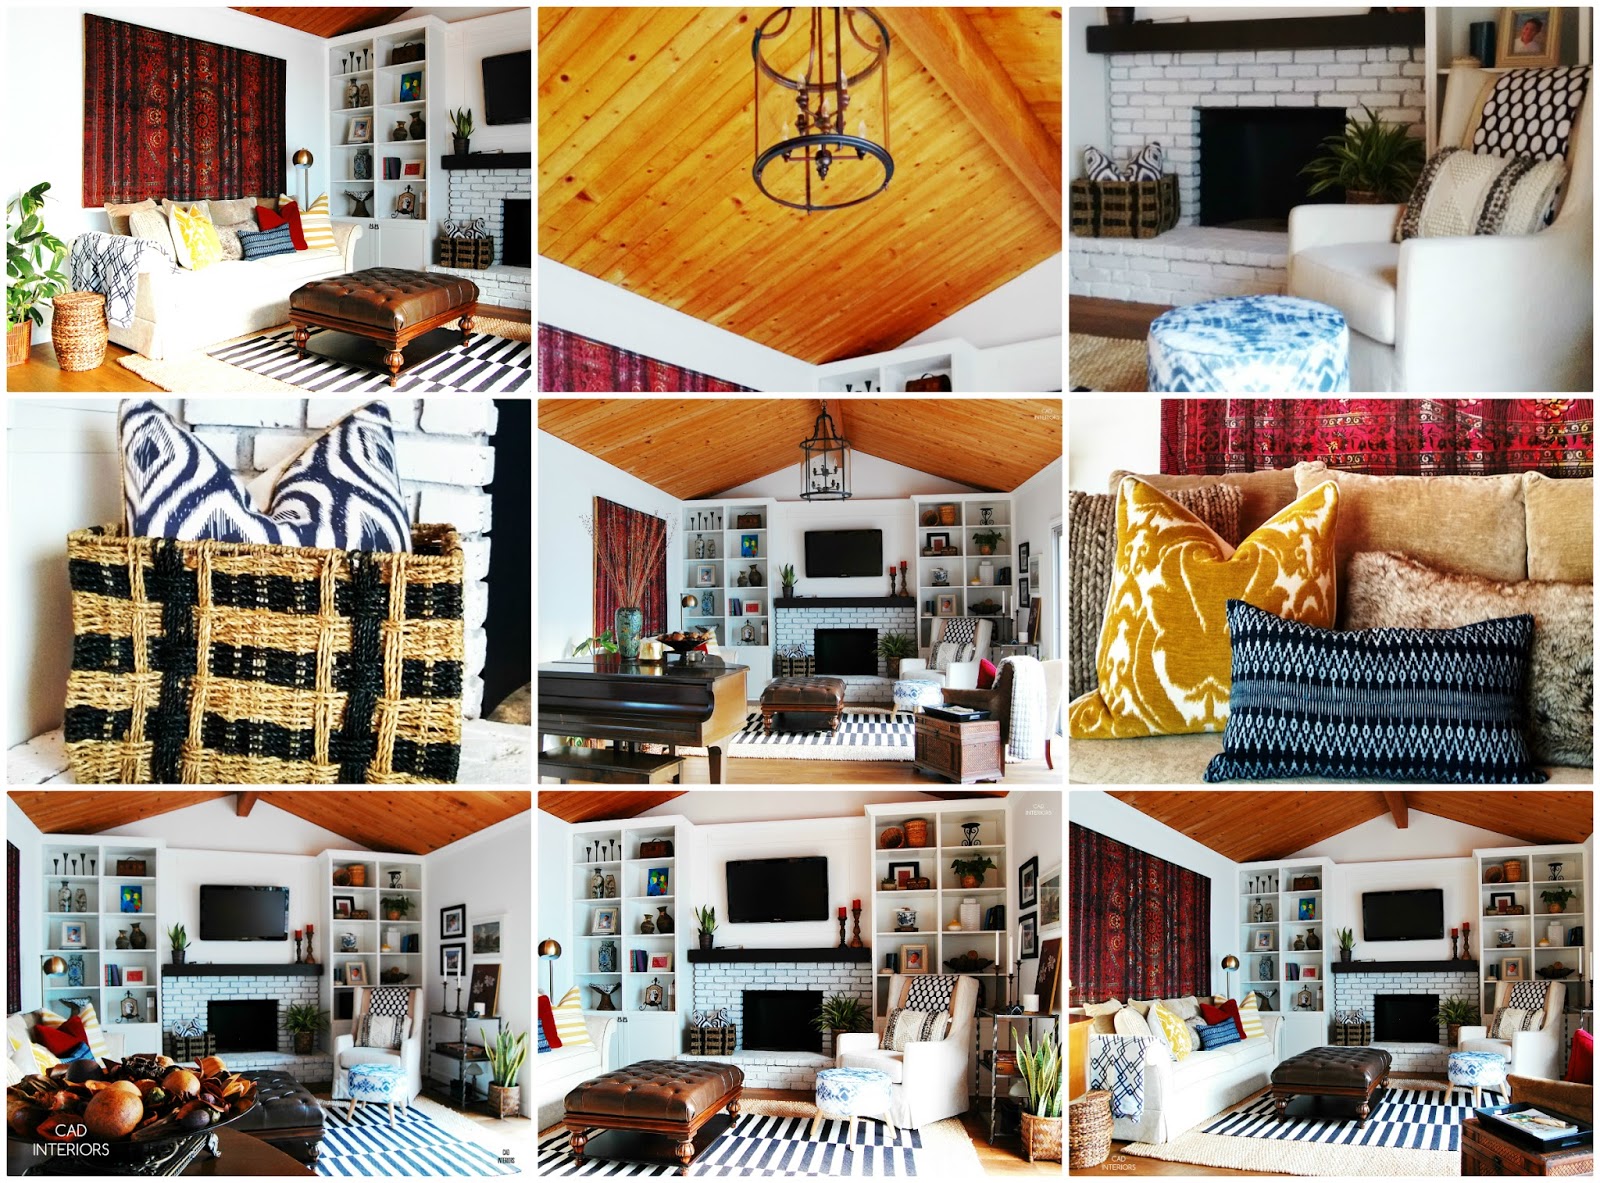 interior design eclectic bohemian modern transitional vintage decorating boho chic